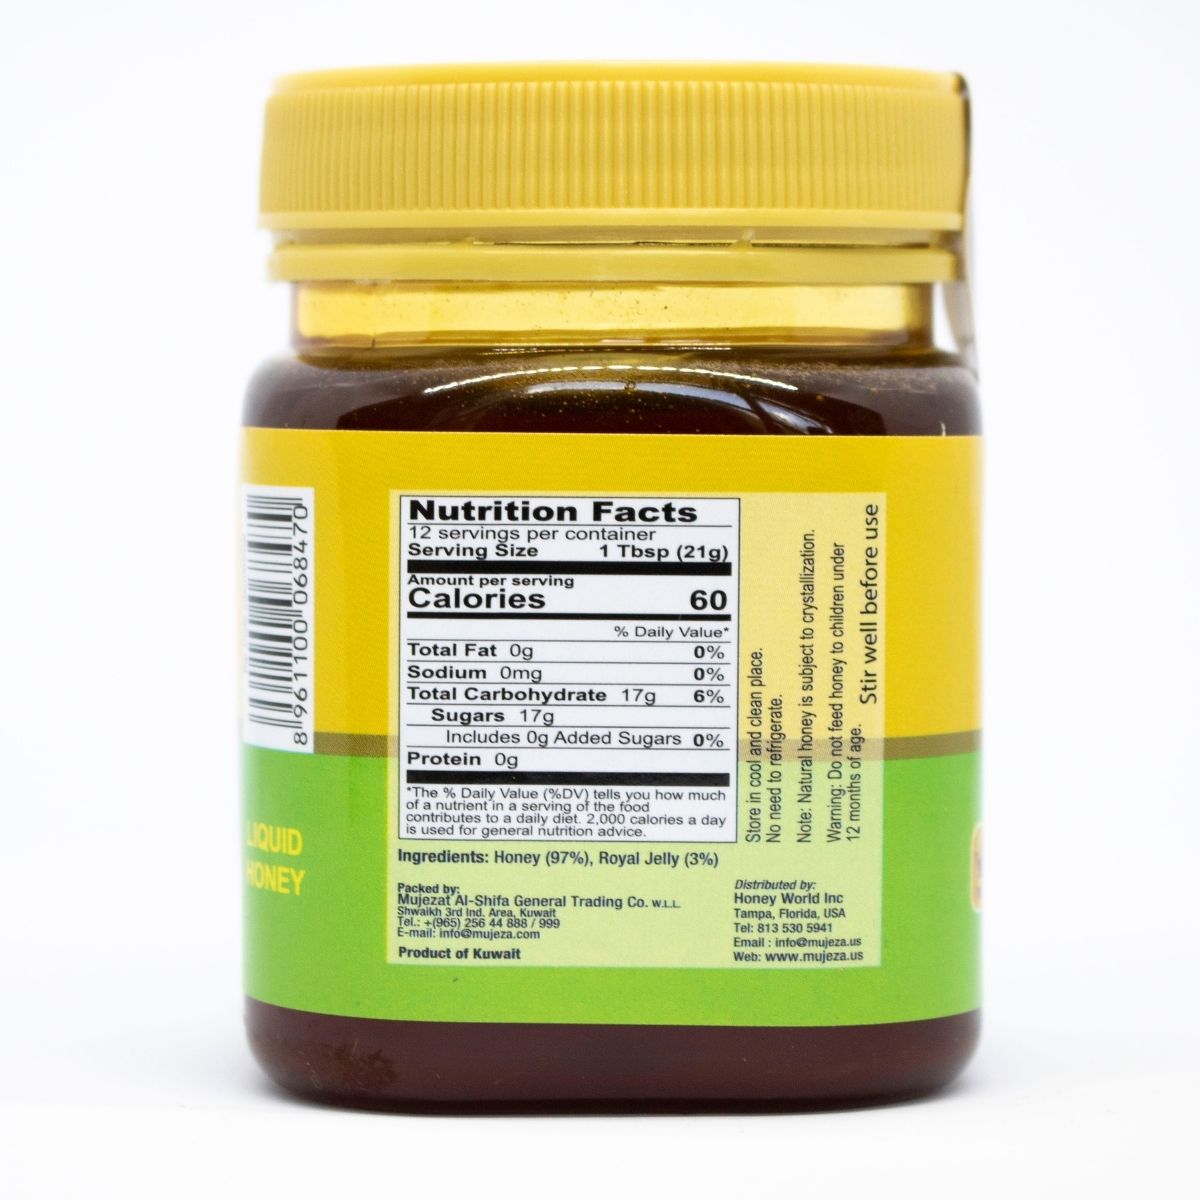 Mountain Sidr Honey (Jujube) with Royal Jelly ingredients - عسل السدر الجبلي مع غذاء الملكات - Mujeza Honey - 3